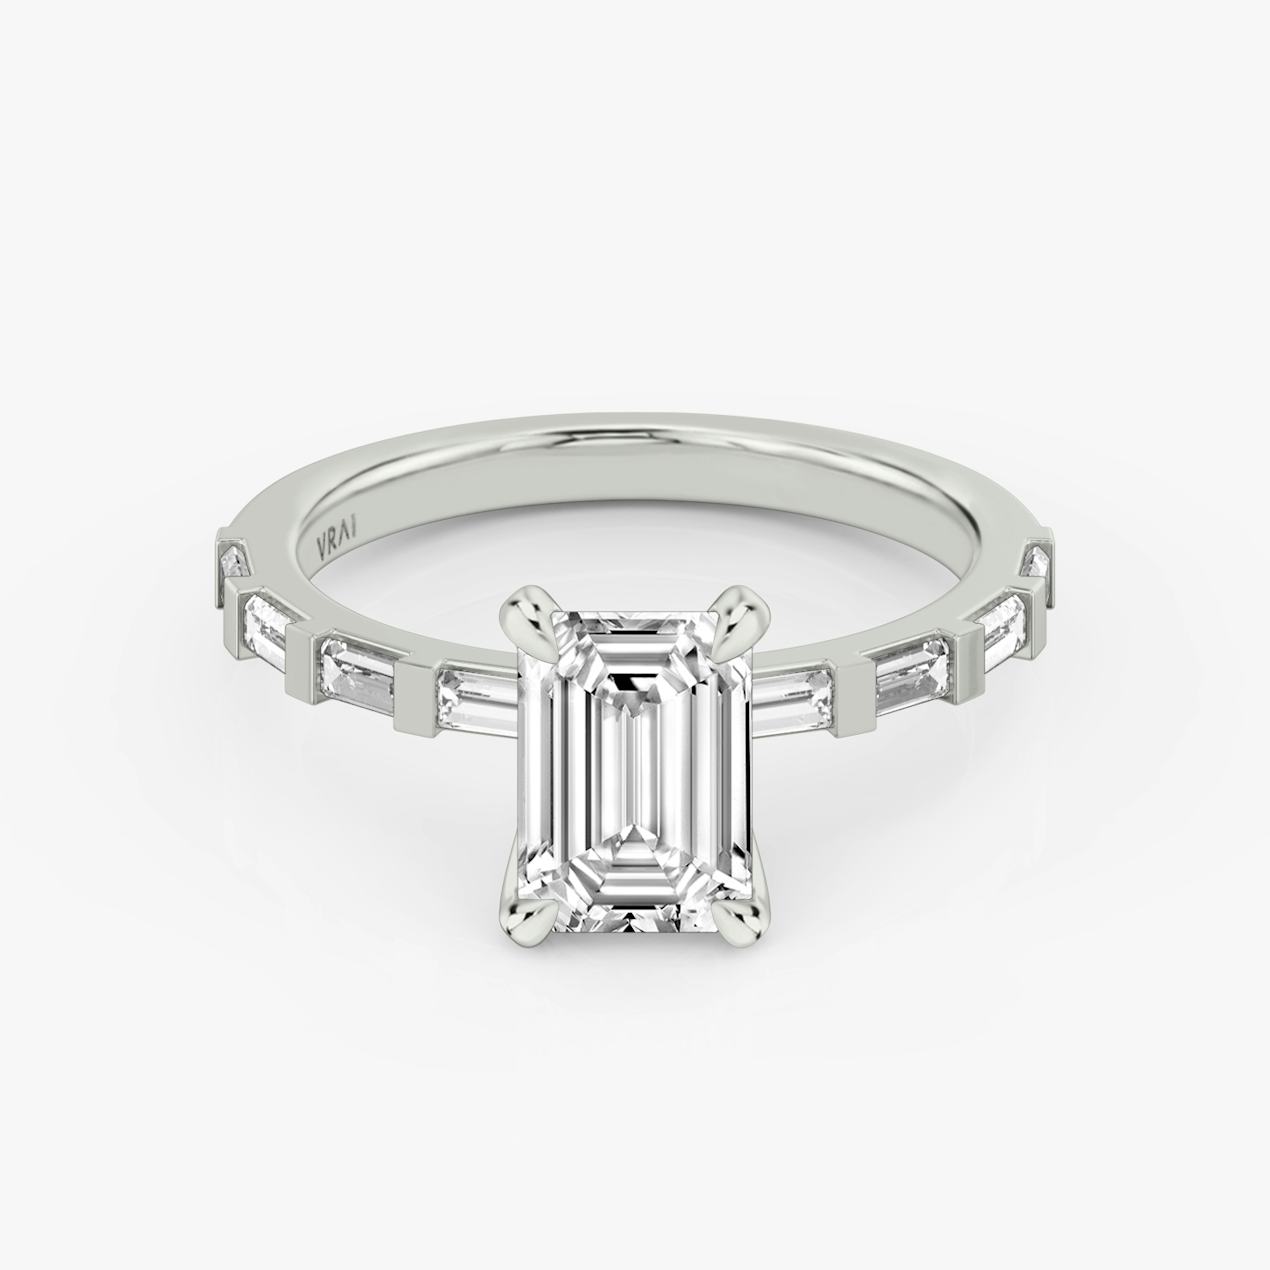 The Baguette Bar Emerald Engagement Ring